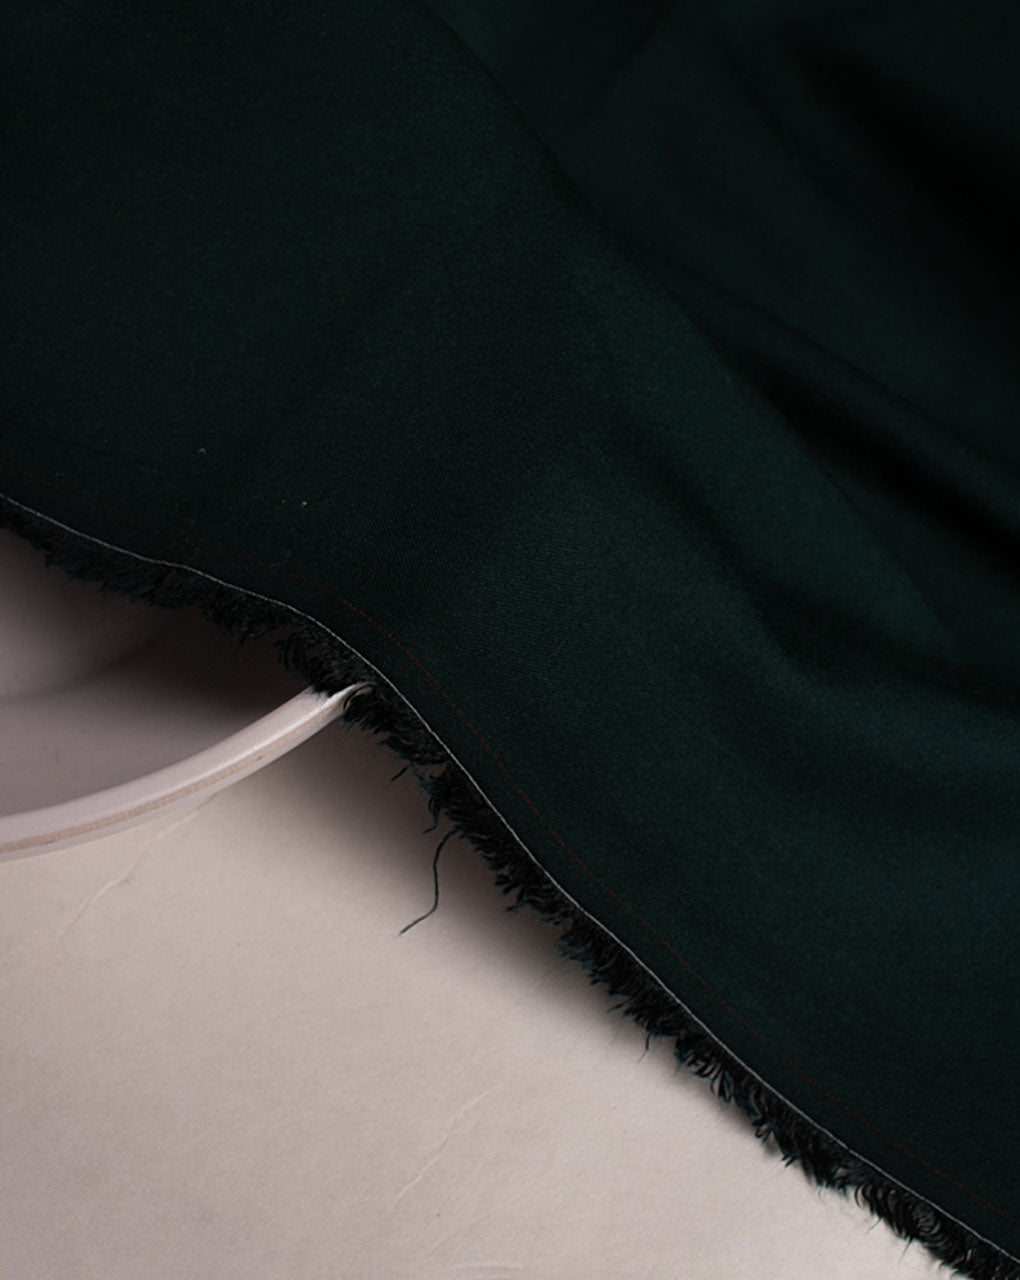 Green Plain Rayon Fabric